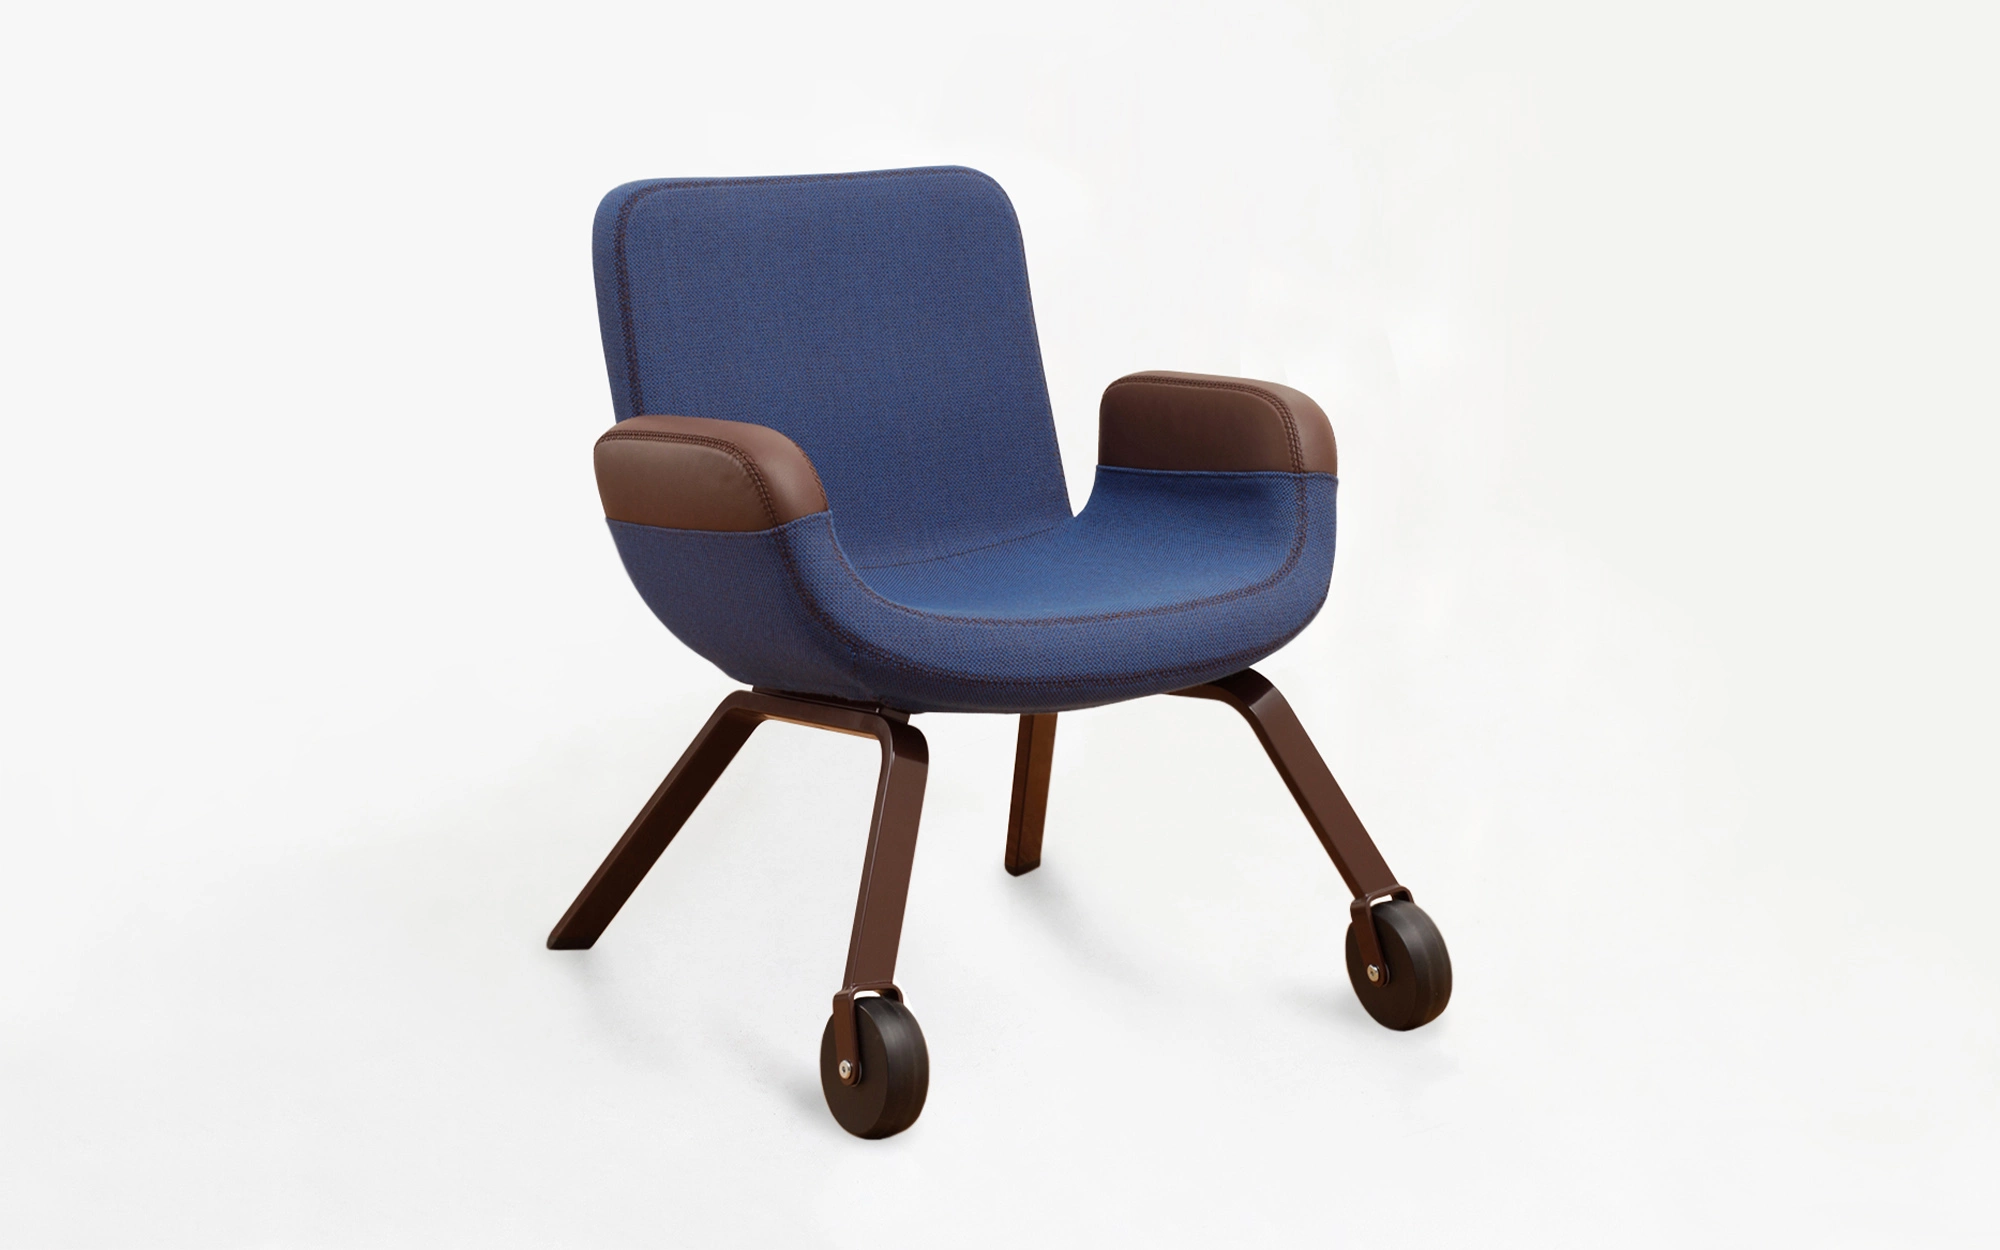 UN Lounge Chair - Hella Jongerius - Wall light - Galerie kreo